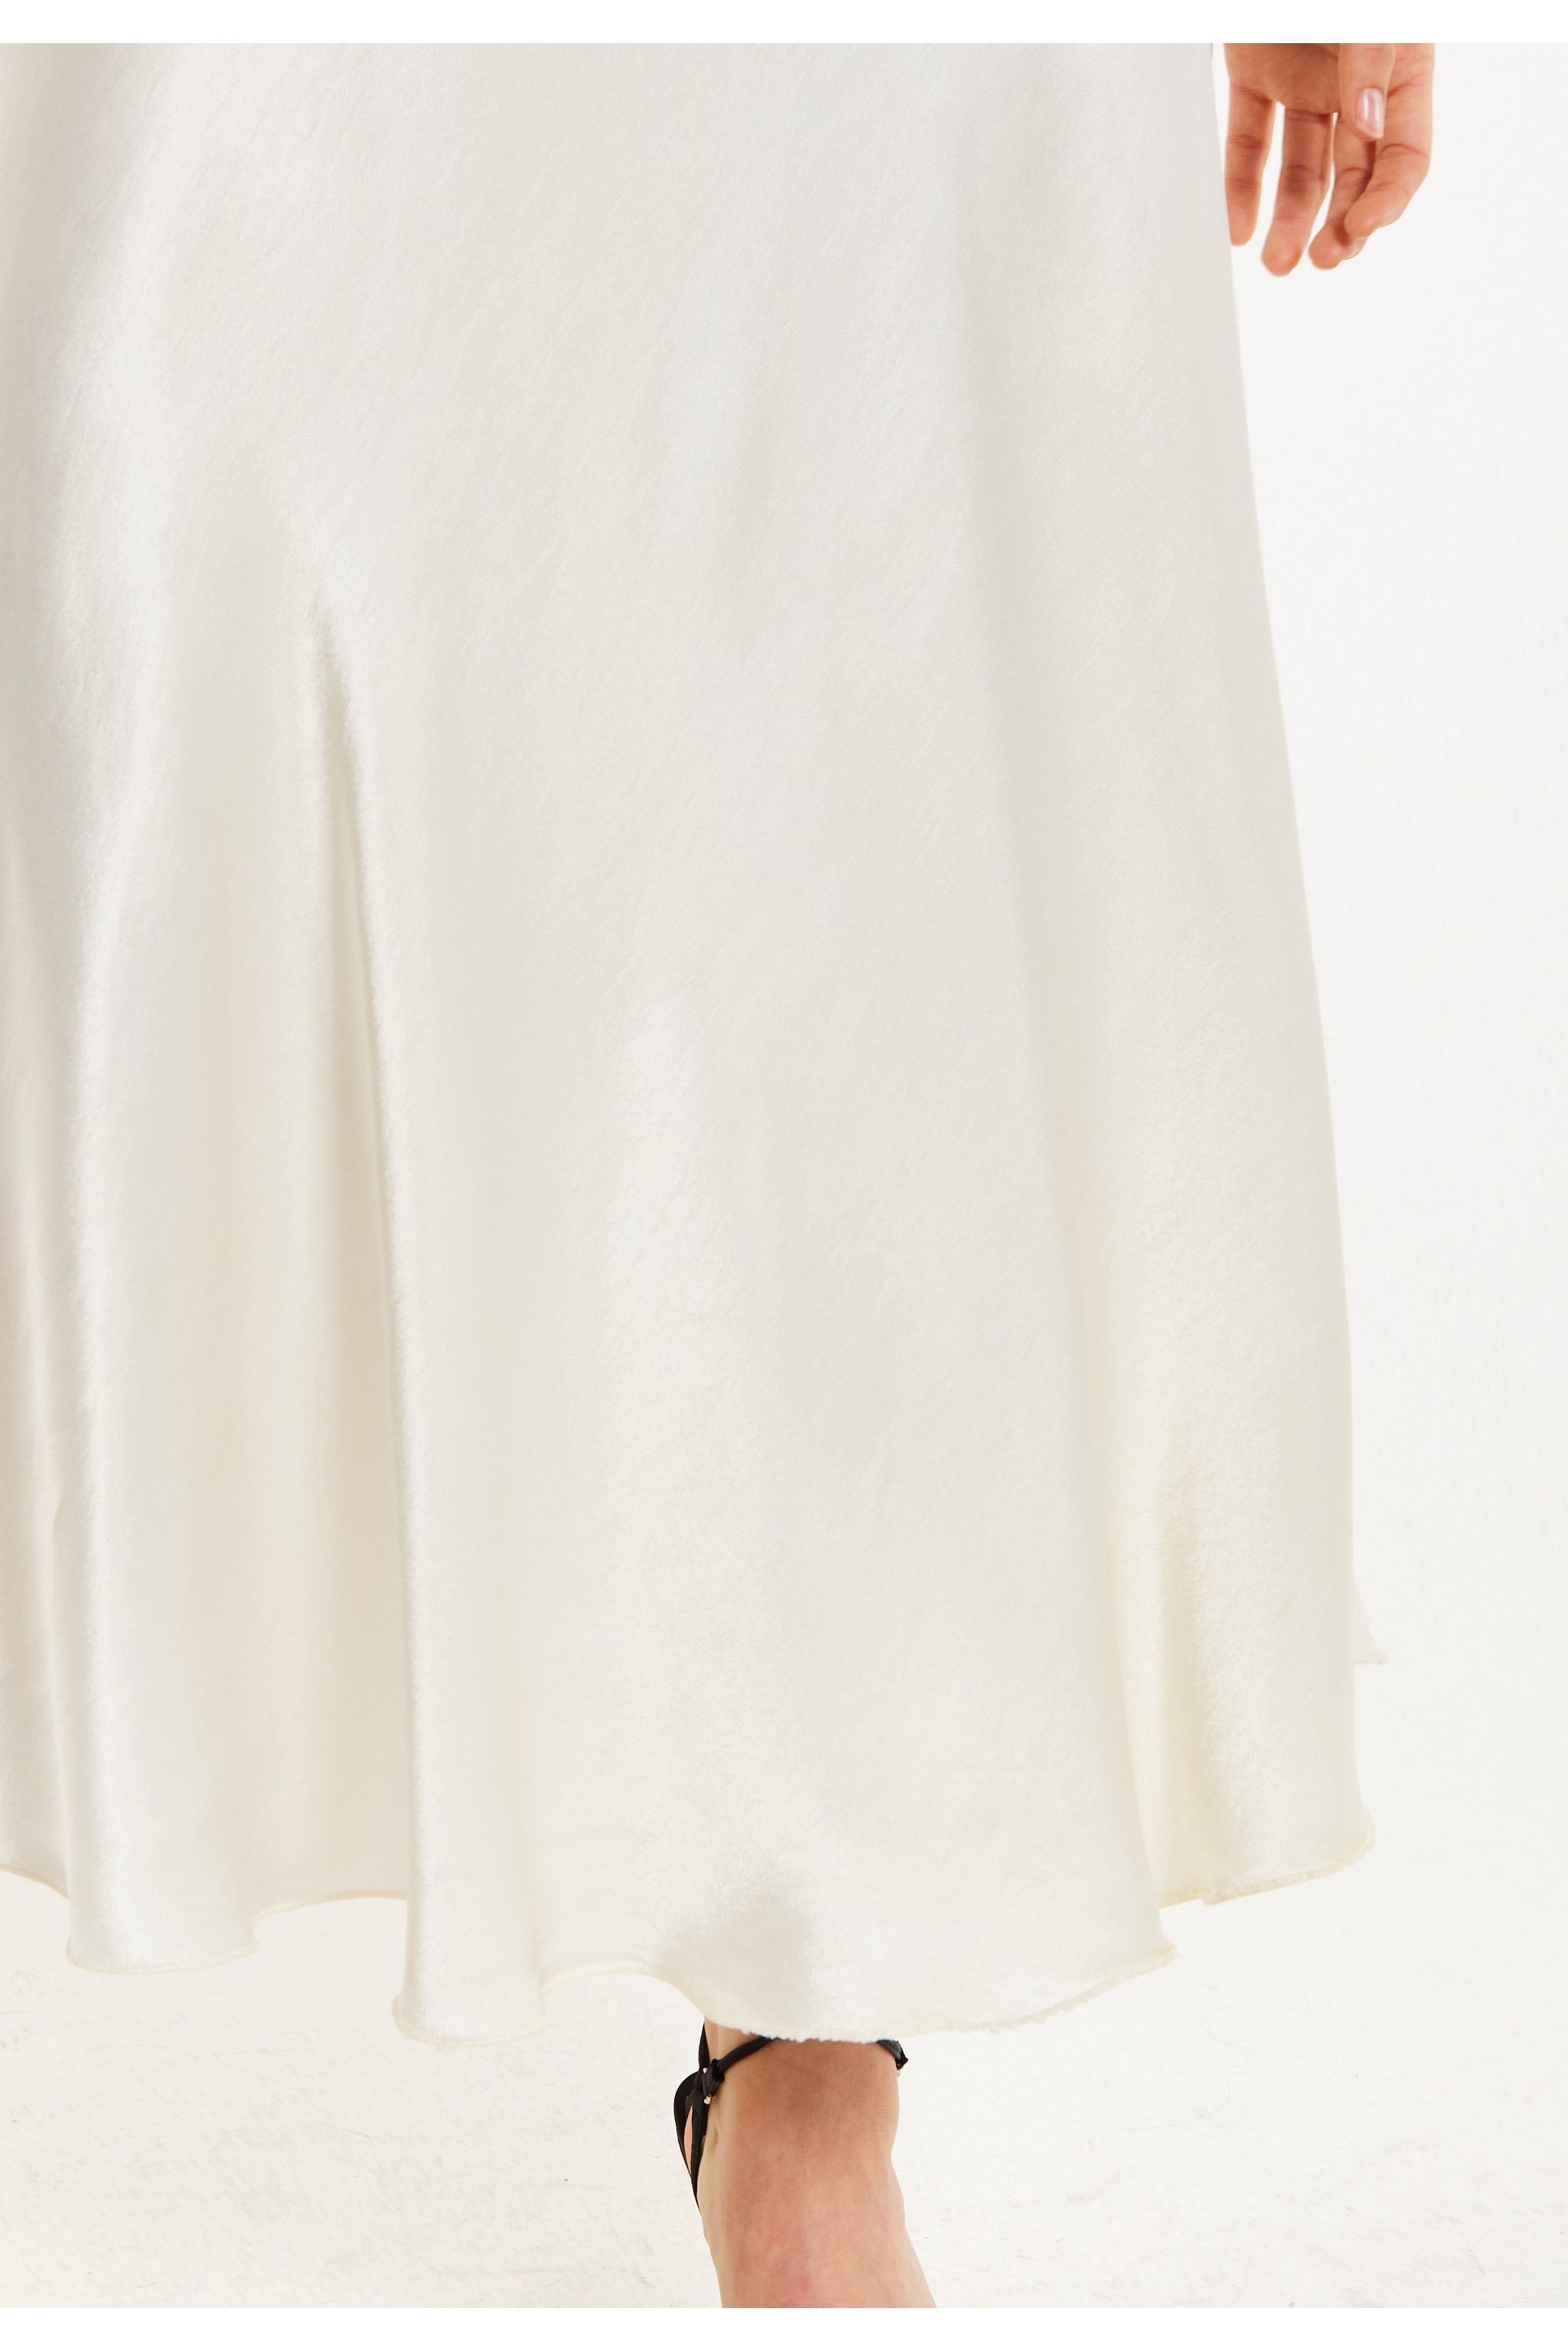 Bias Cut White Satin Skirt UAL01404